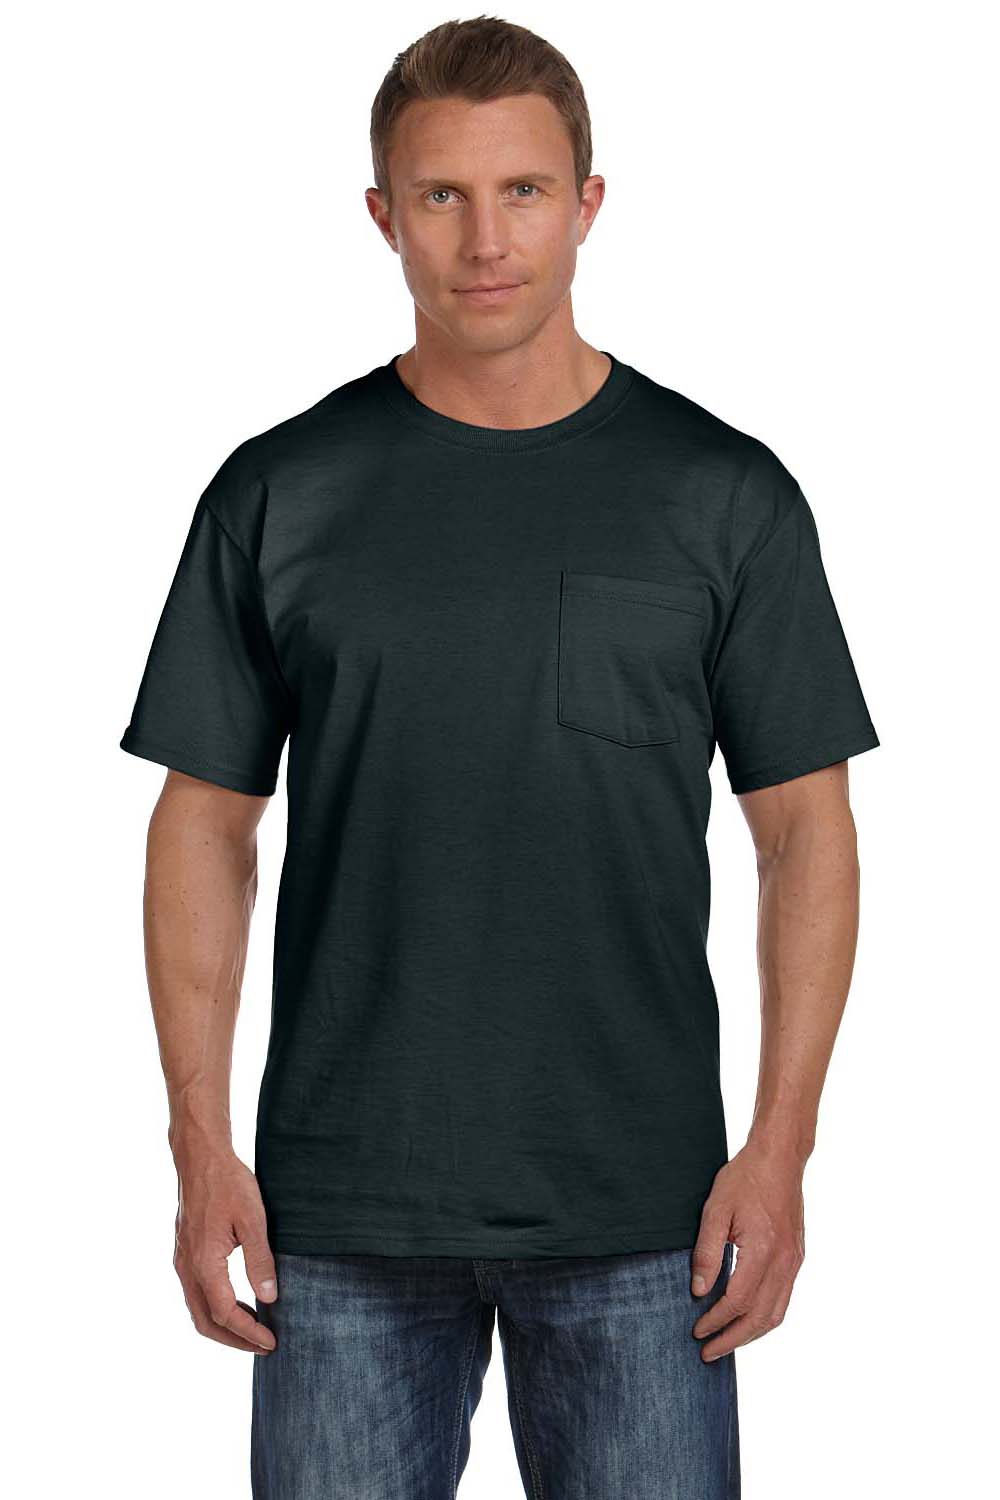 Fruit Of The Loom 3931P Mens HD Jersey Short Sleeve Crewneck T-Shirt w/ Pocket Black Front